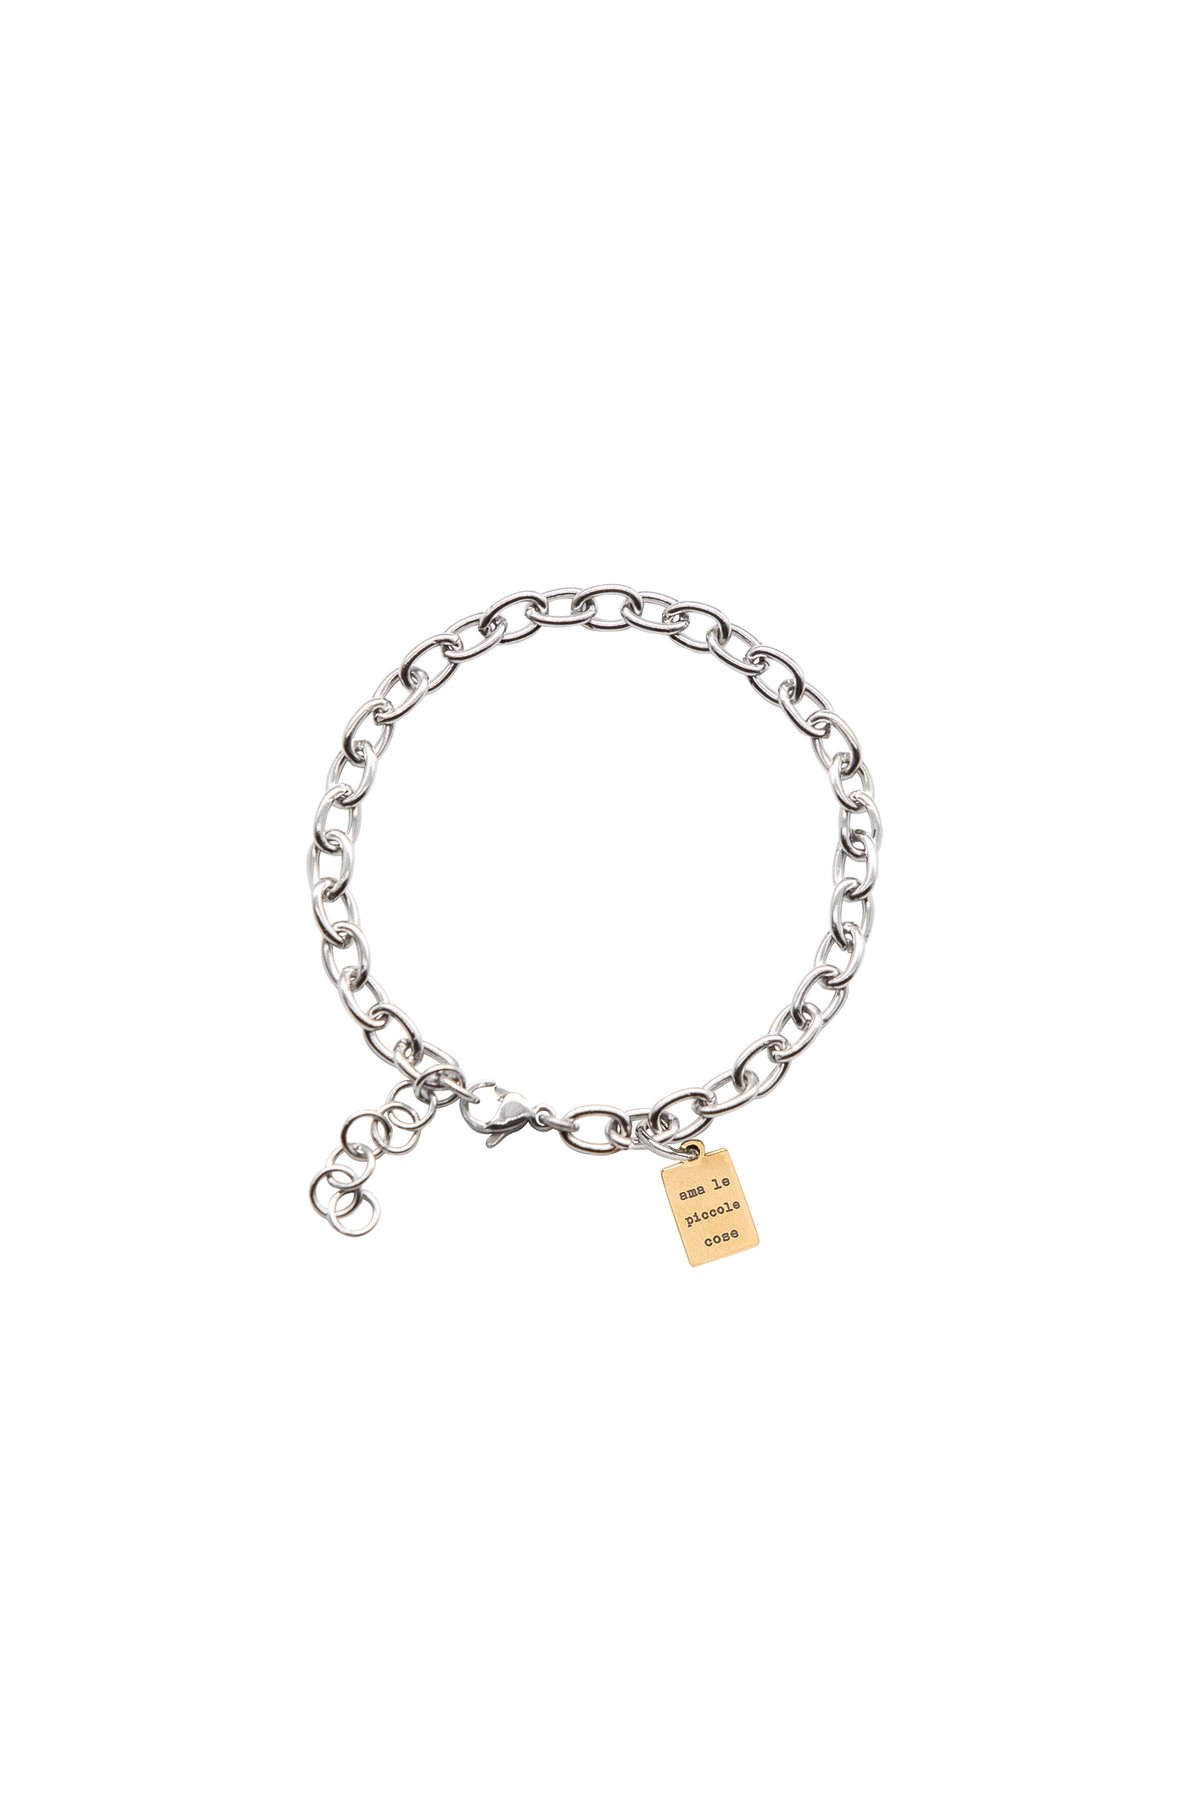 Image of Ama le piccole cose ⭑ bracelet in gold